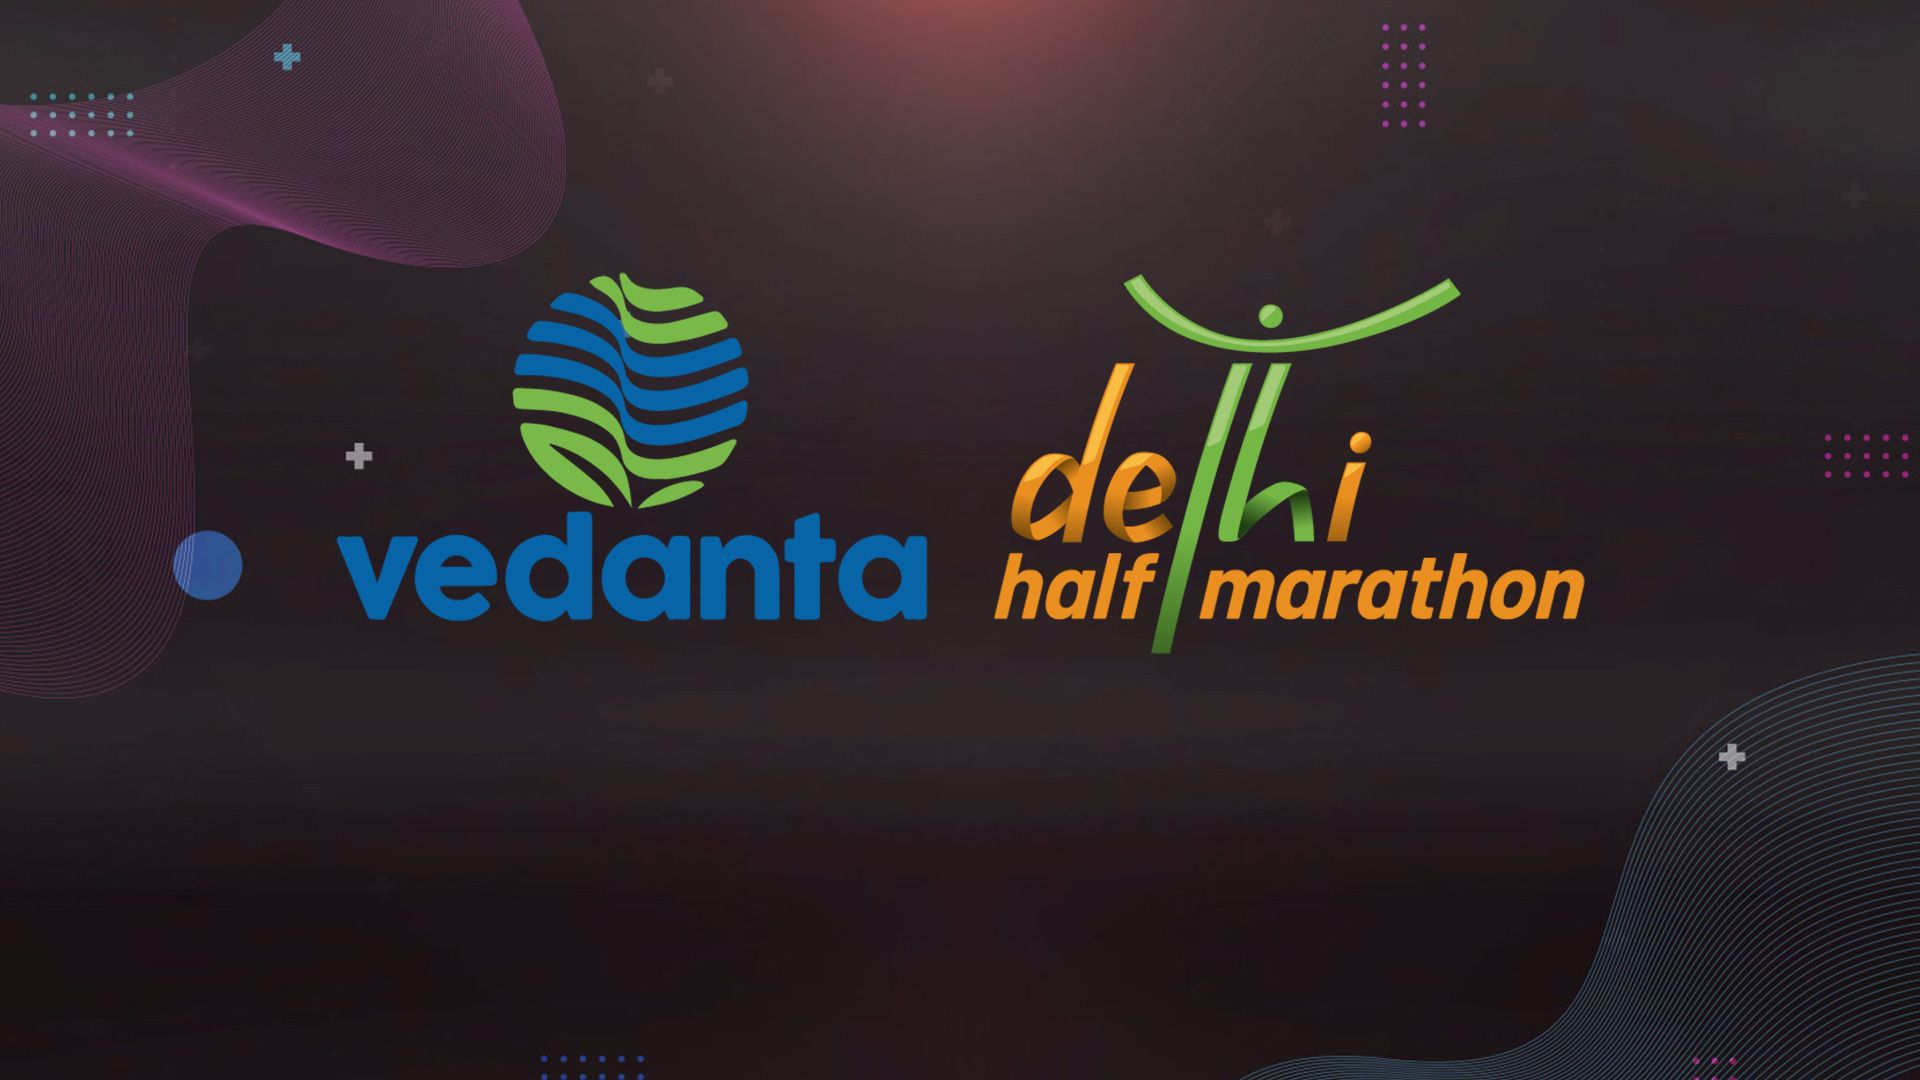 Vedanta Delhi Half Marathon 2022